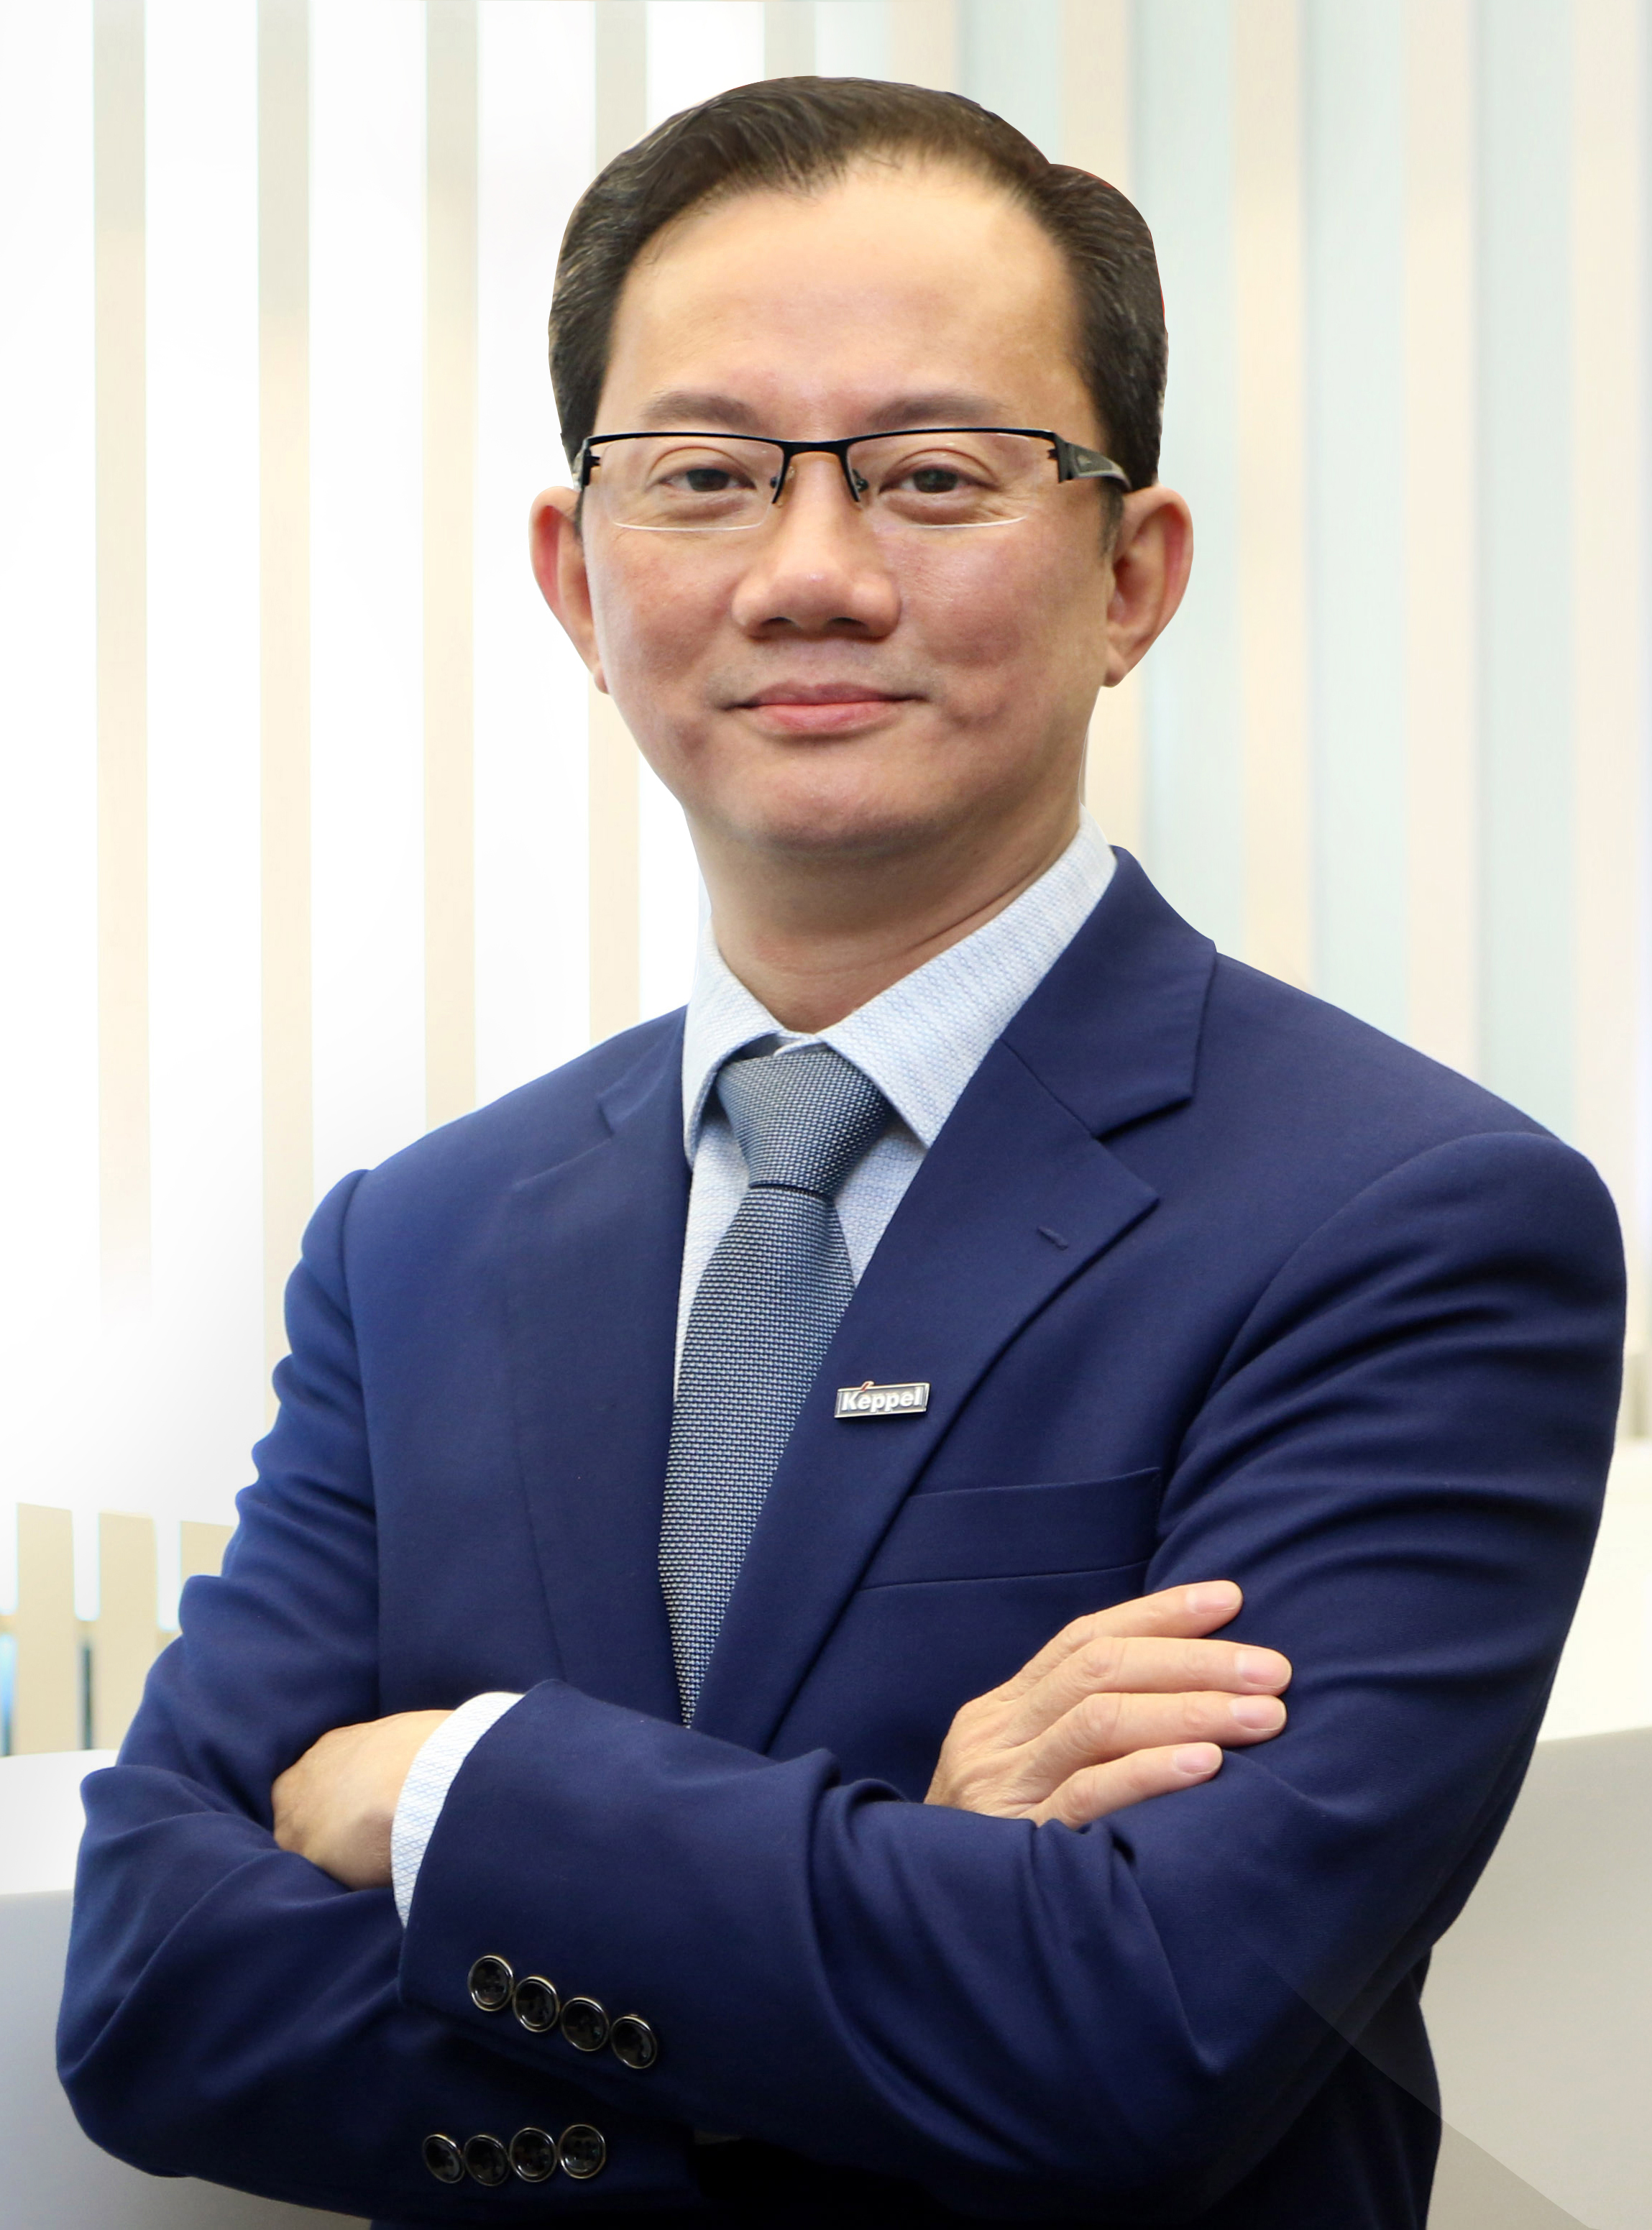 Mr. Joseph Low, President (Vietnam), Real Estate, Keppel Corporation.